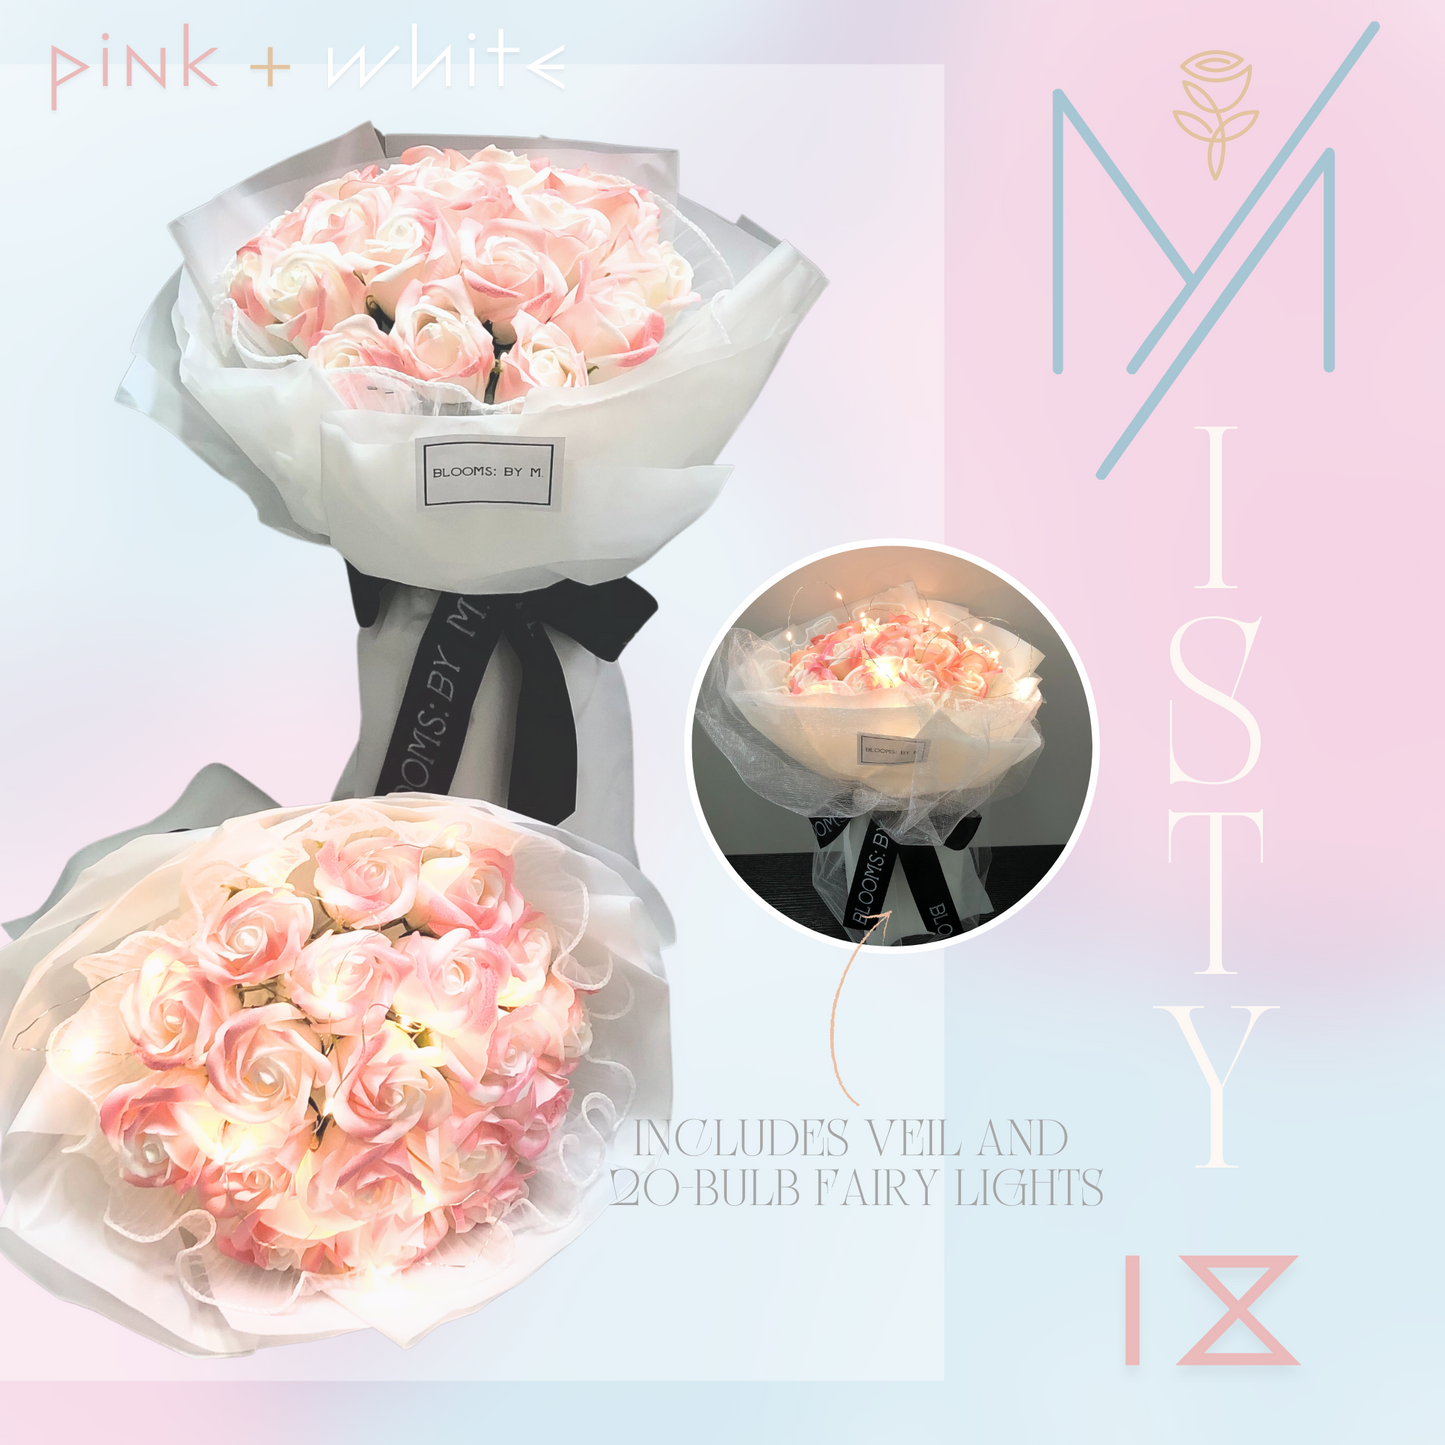 Top 5 - Soap Flower Rose Bouquet - Misty 18